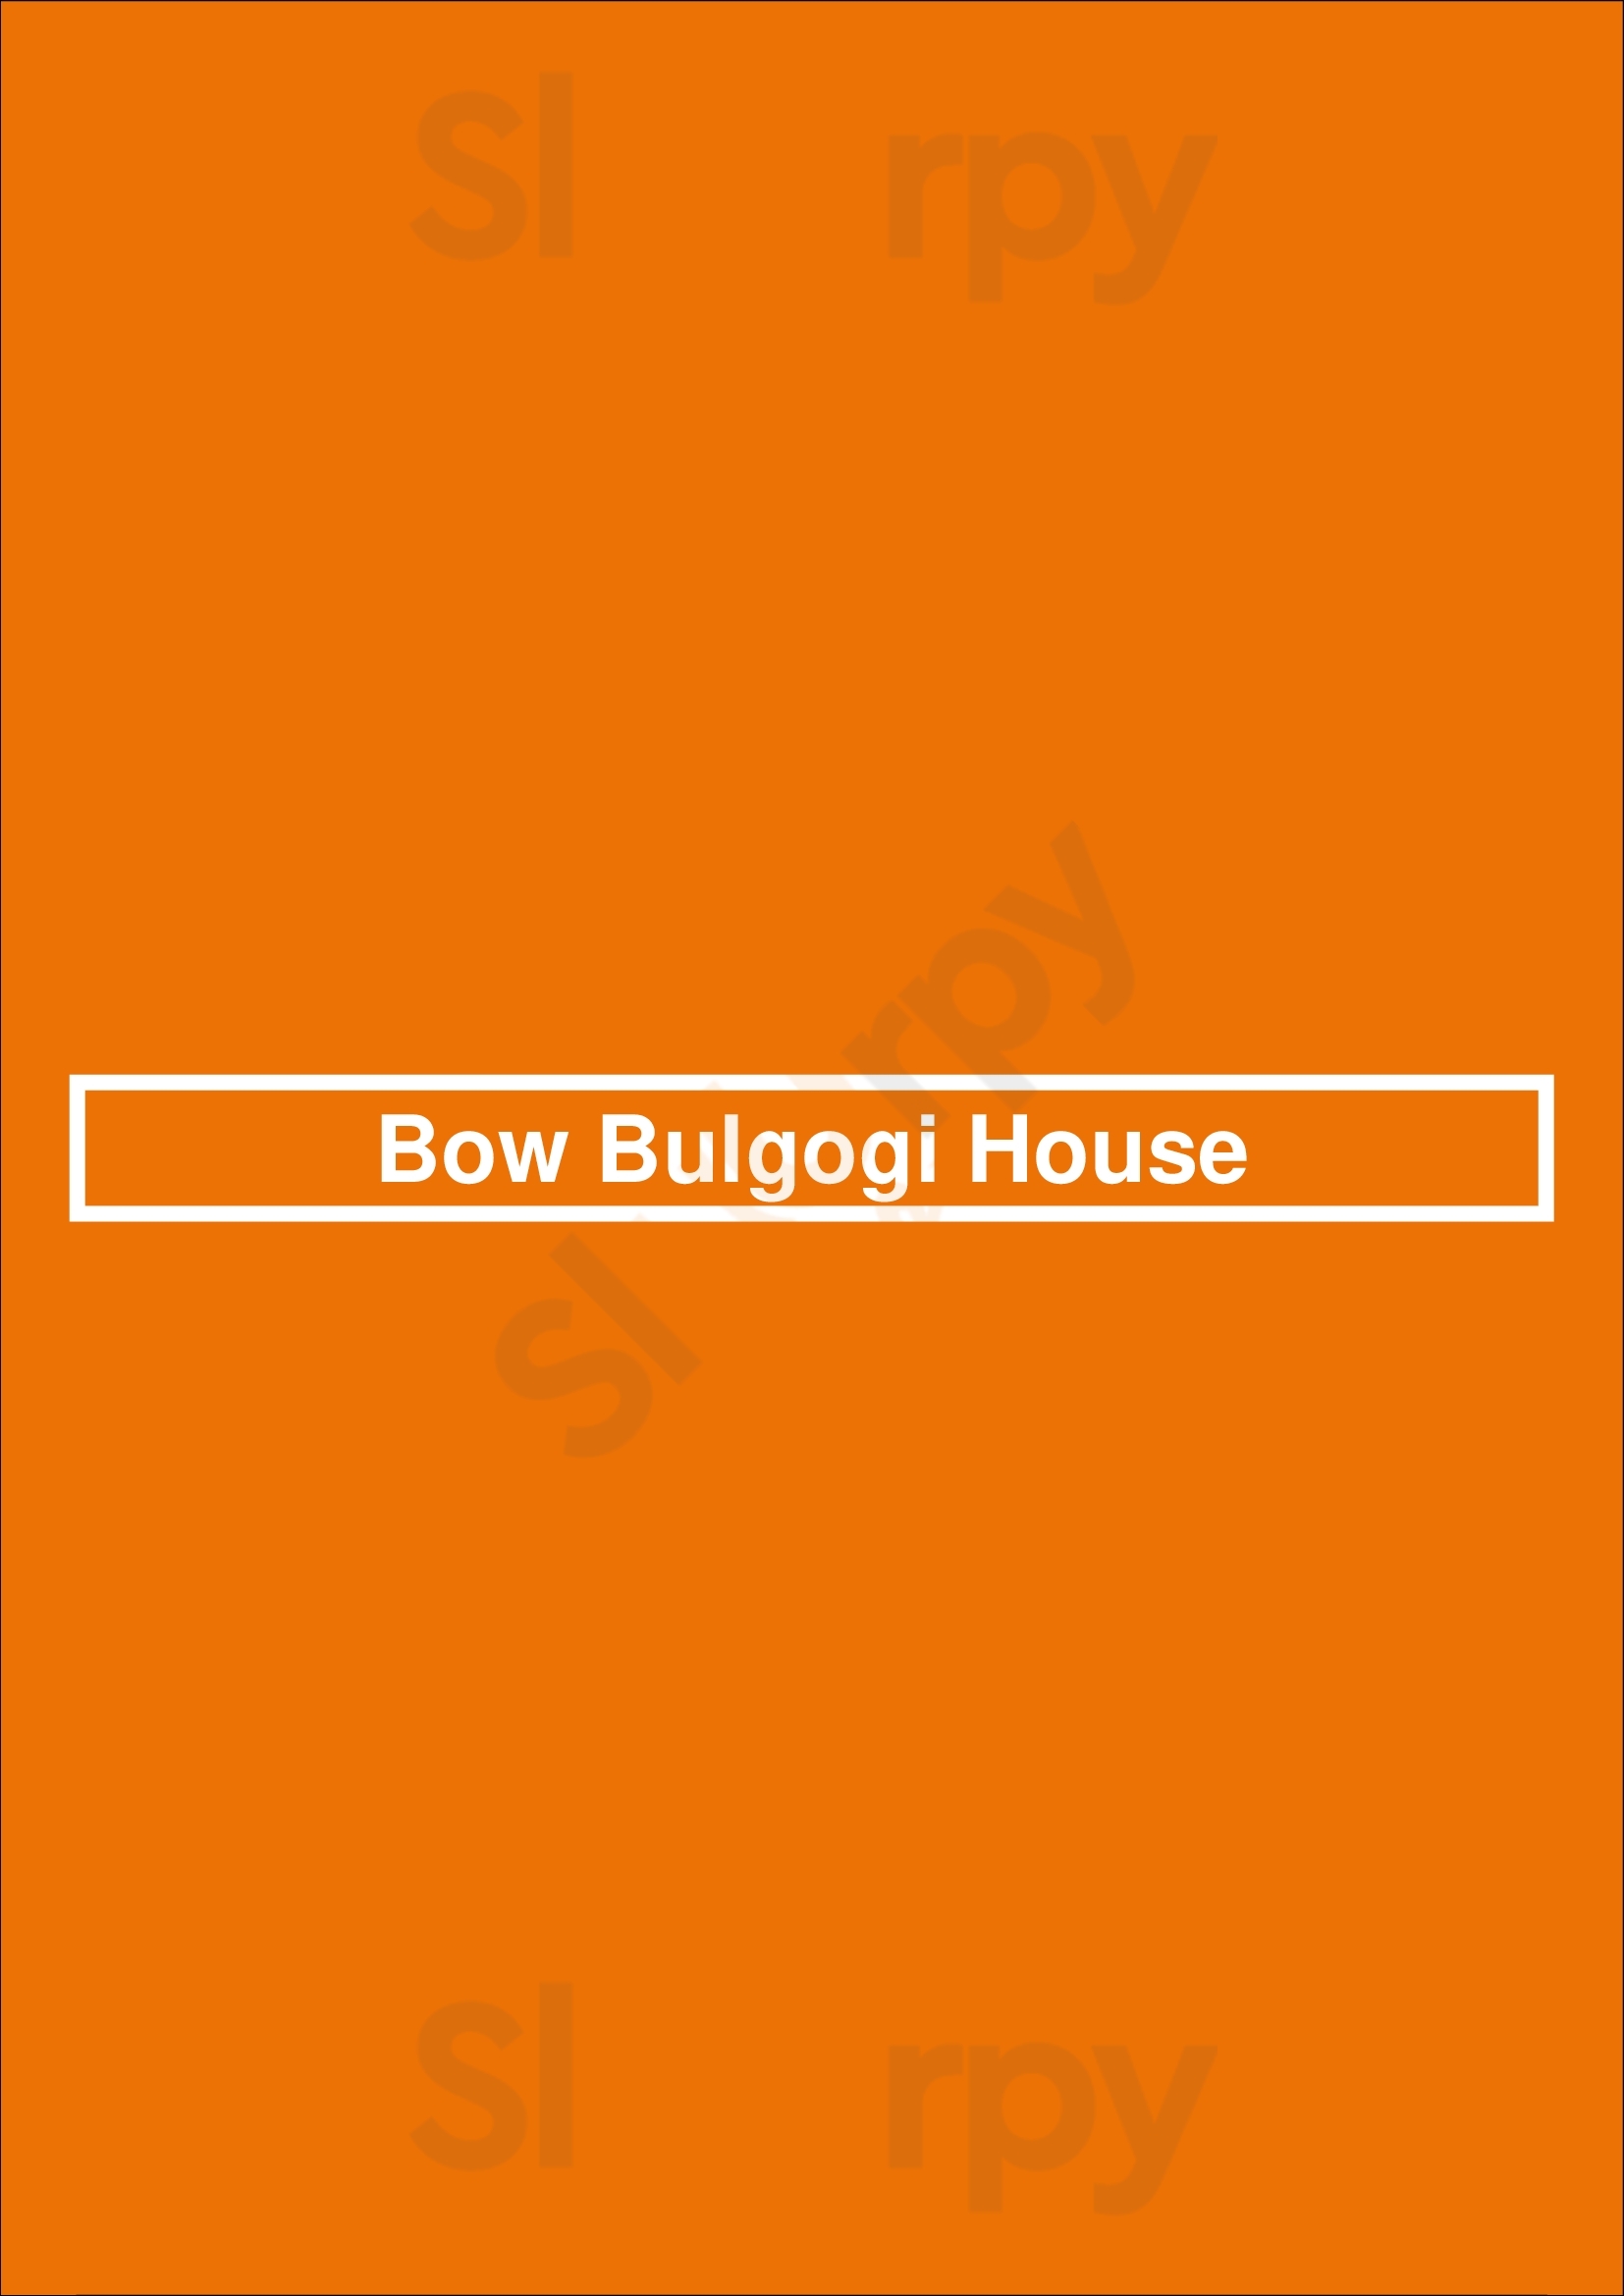 Bow Bulgogi House Calgary Menu - 1